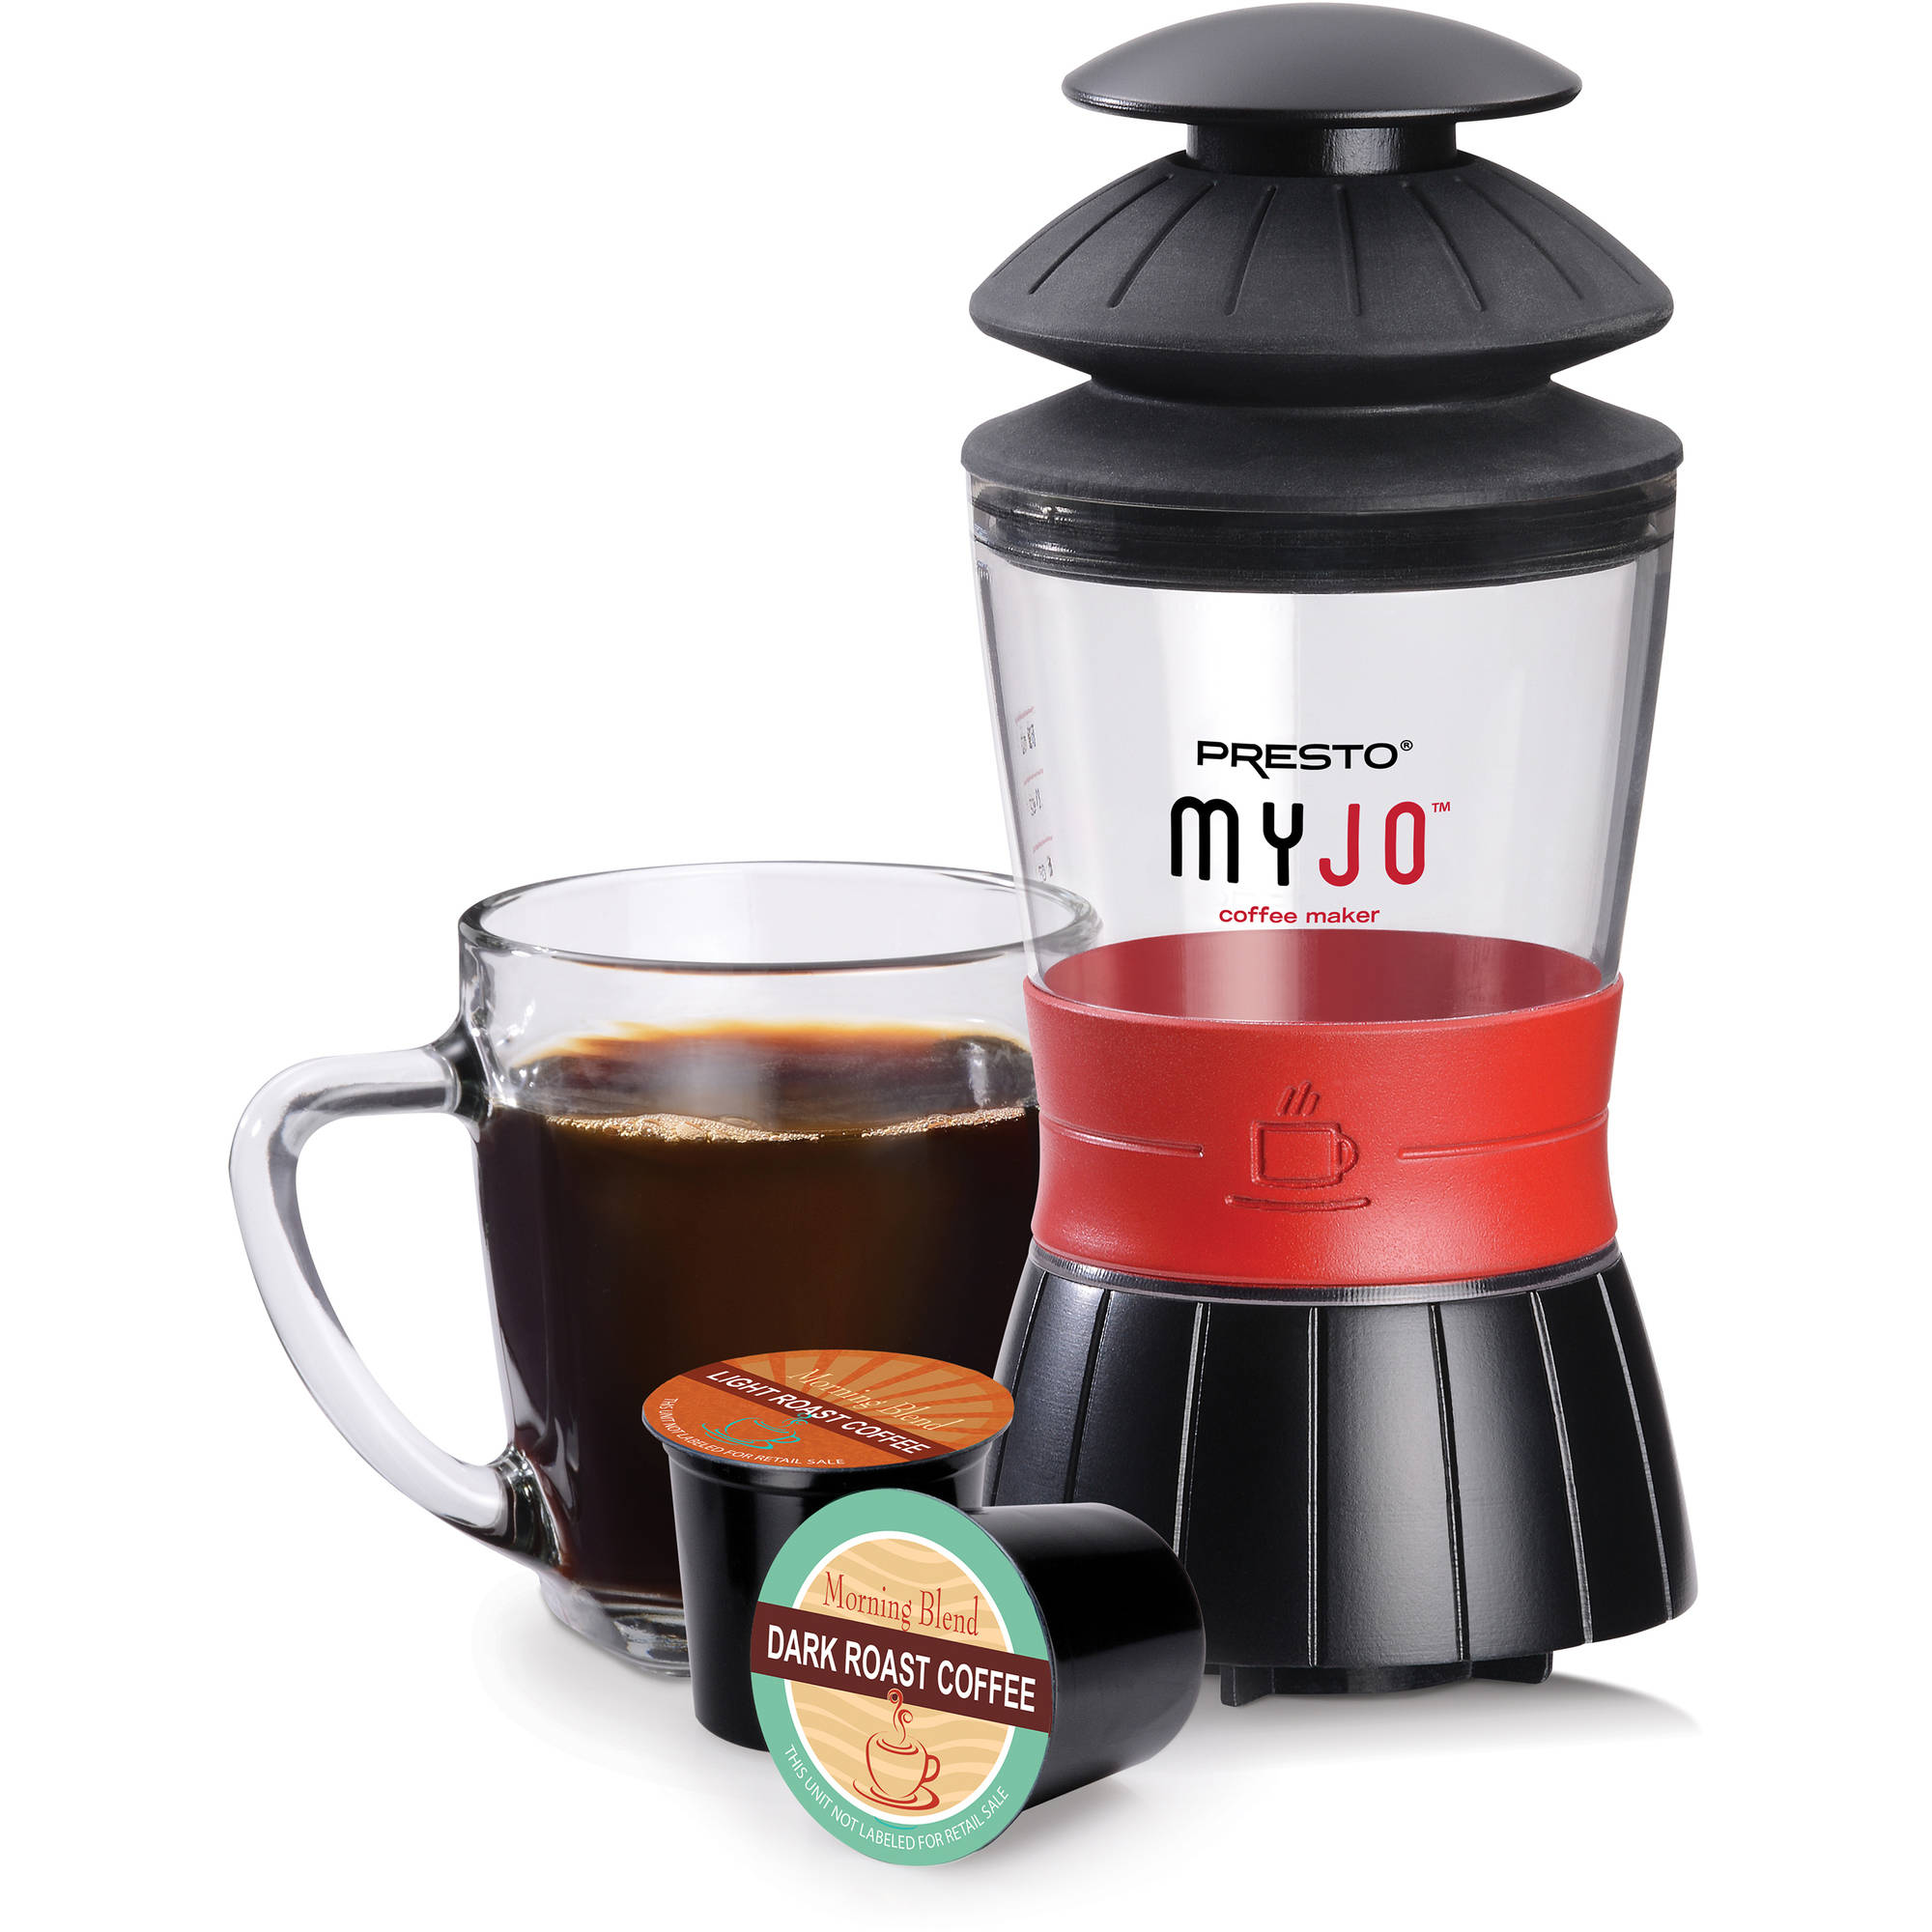 Presto MyJo Single Cup Coffee Maker, Red 02835 - image 1 of 5